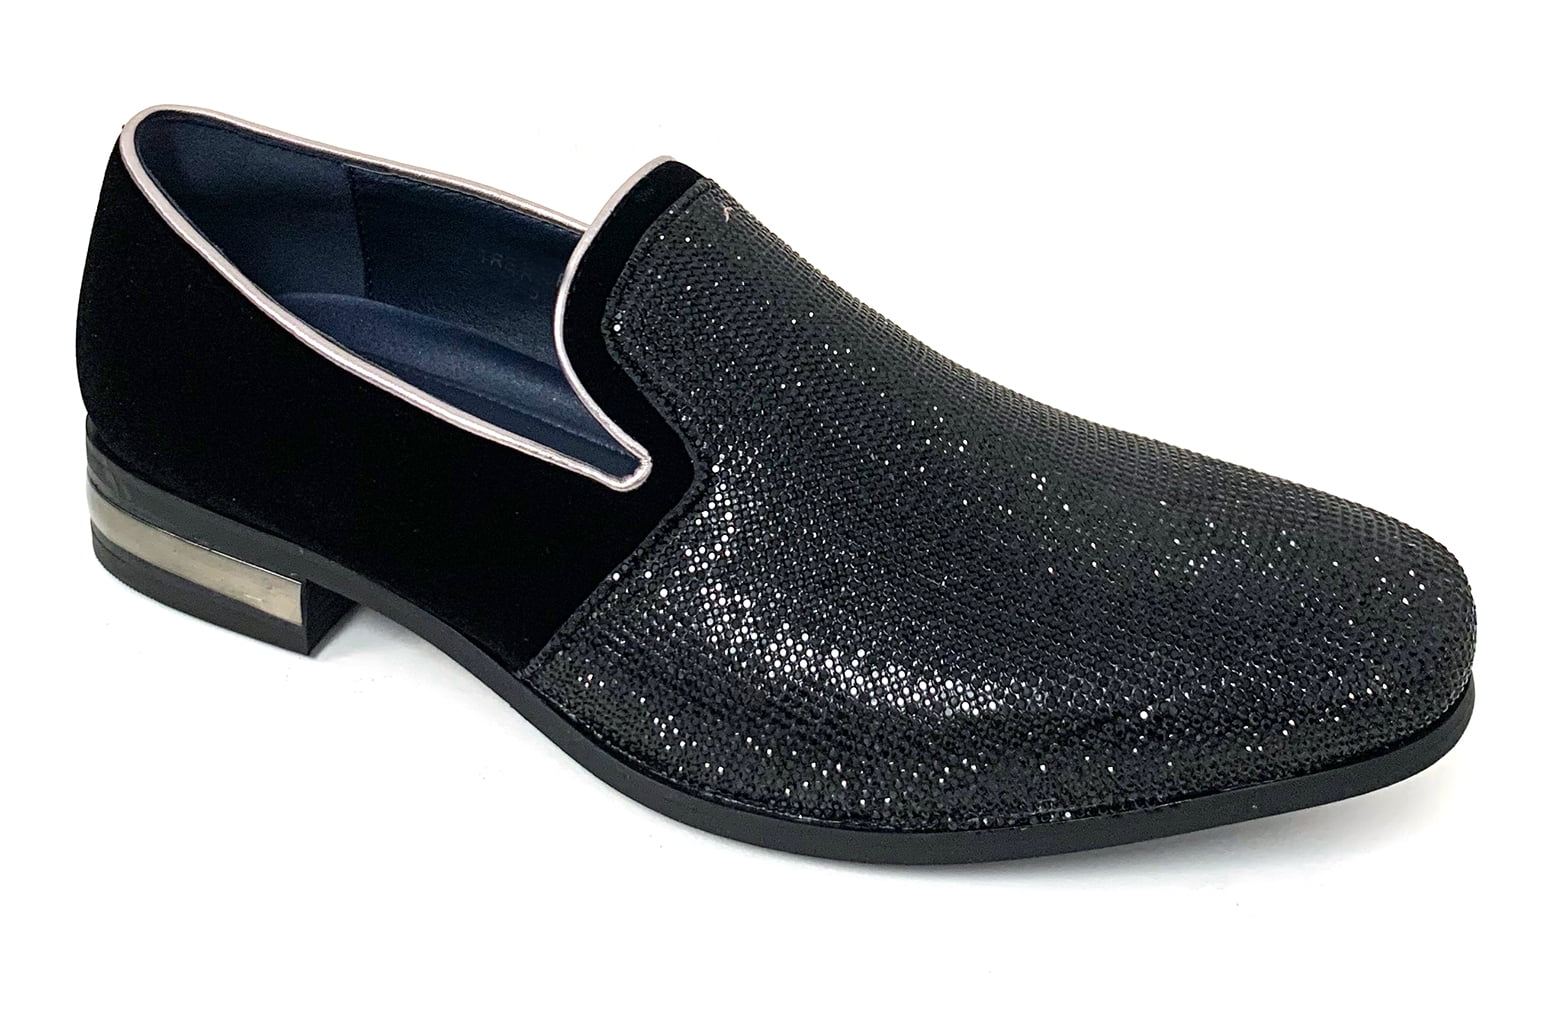 Amali Men's Sparkly Black and White Plaid Shimmering Slip On Loafer 